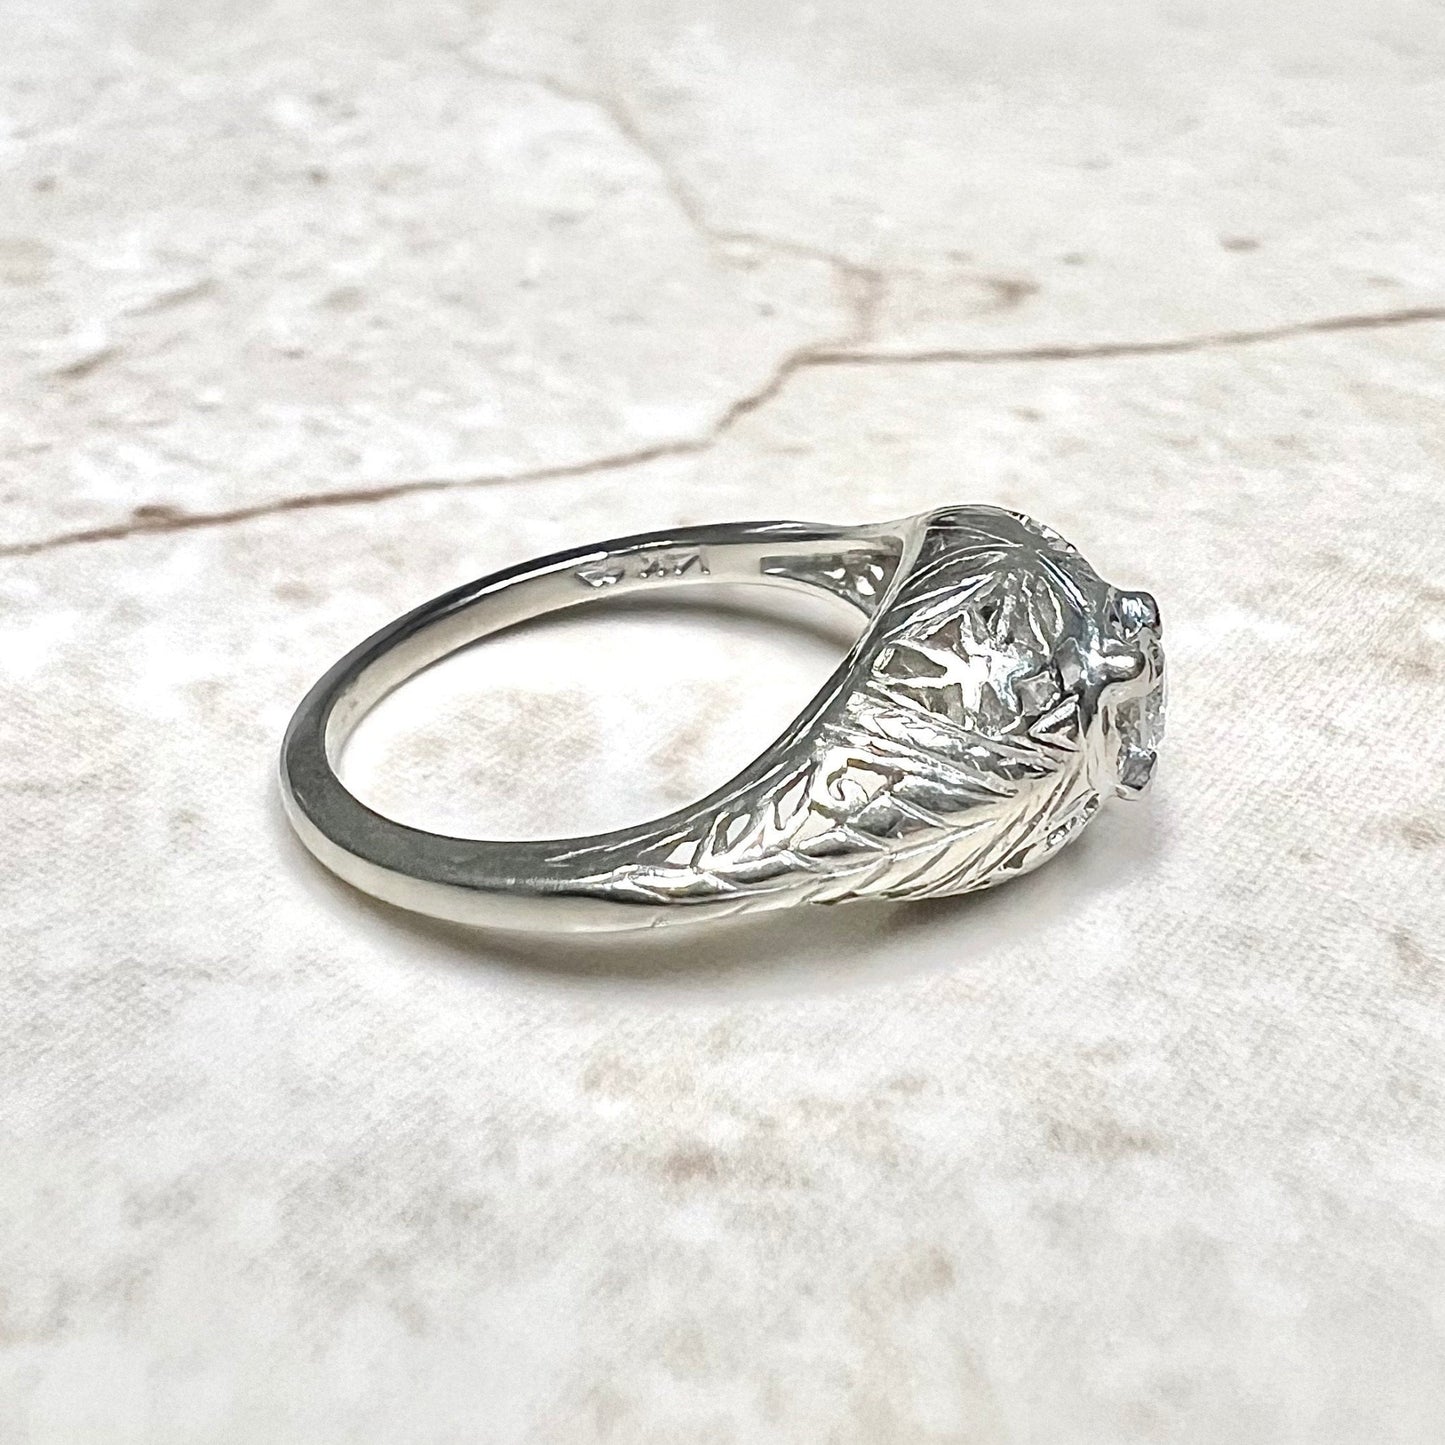 Antique Diamond Engagement Ring - Solid 14K White Gold Diamond Solitaire Ring - Edwardian Ring - 14K Diamond Wedding Ring - Diamond Ring